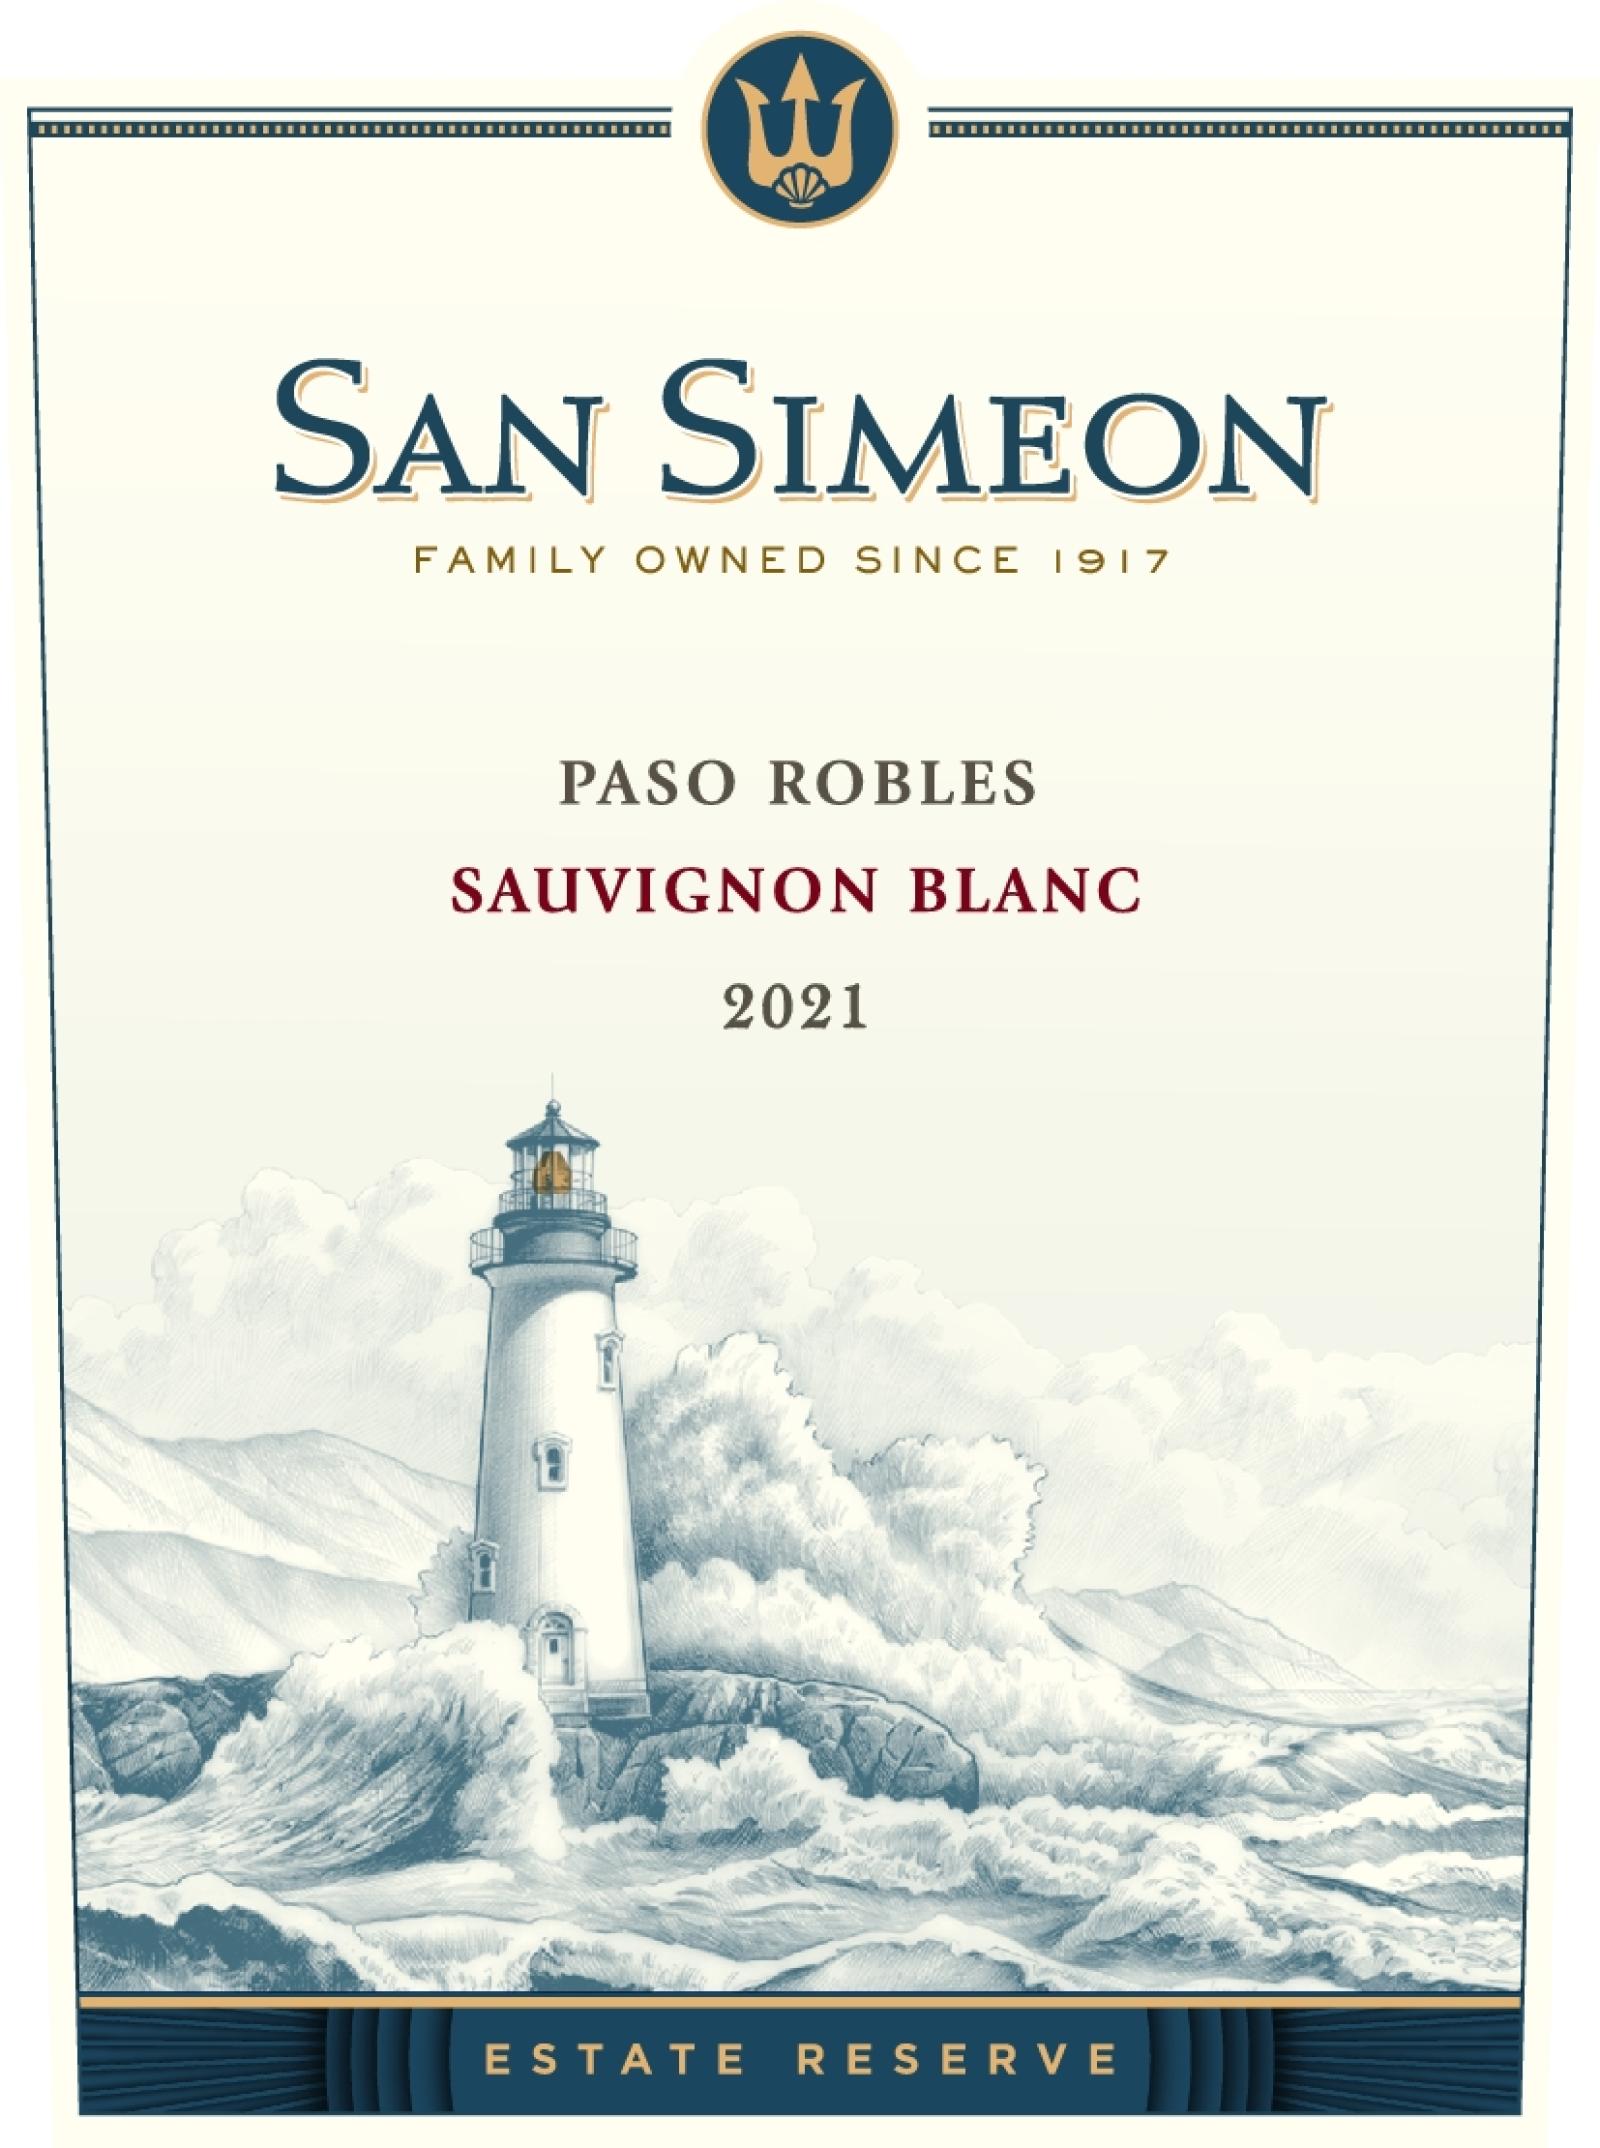 San Simeon Sauvignon Blanc 2021